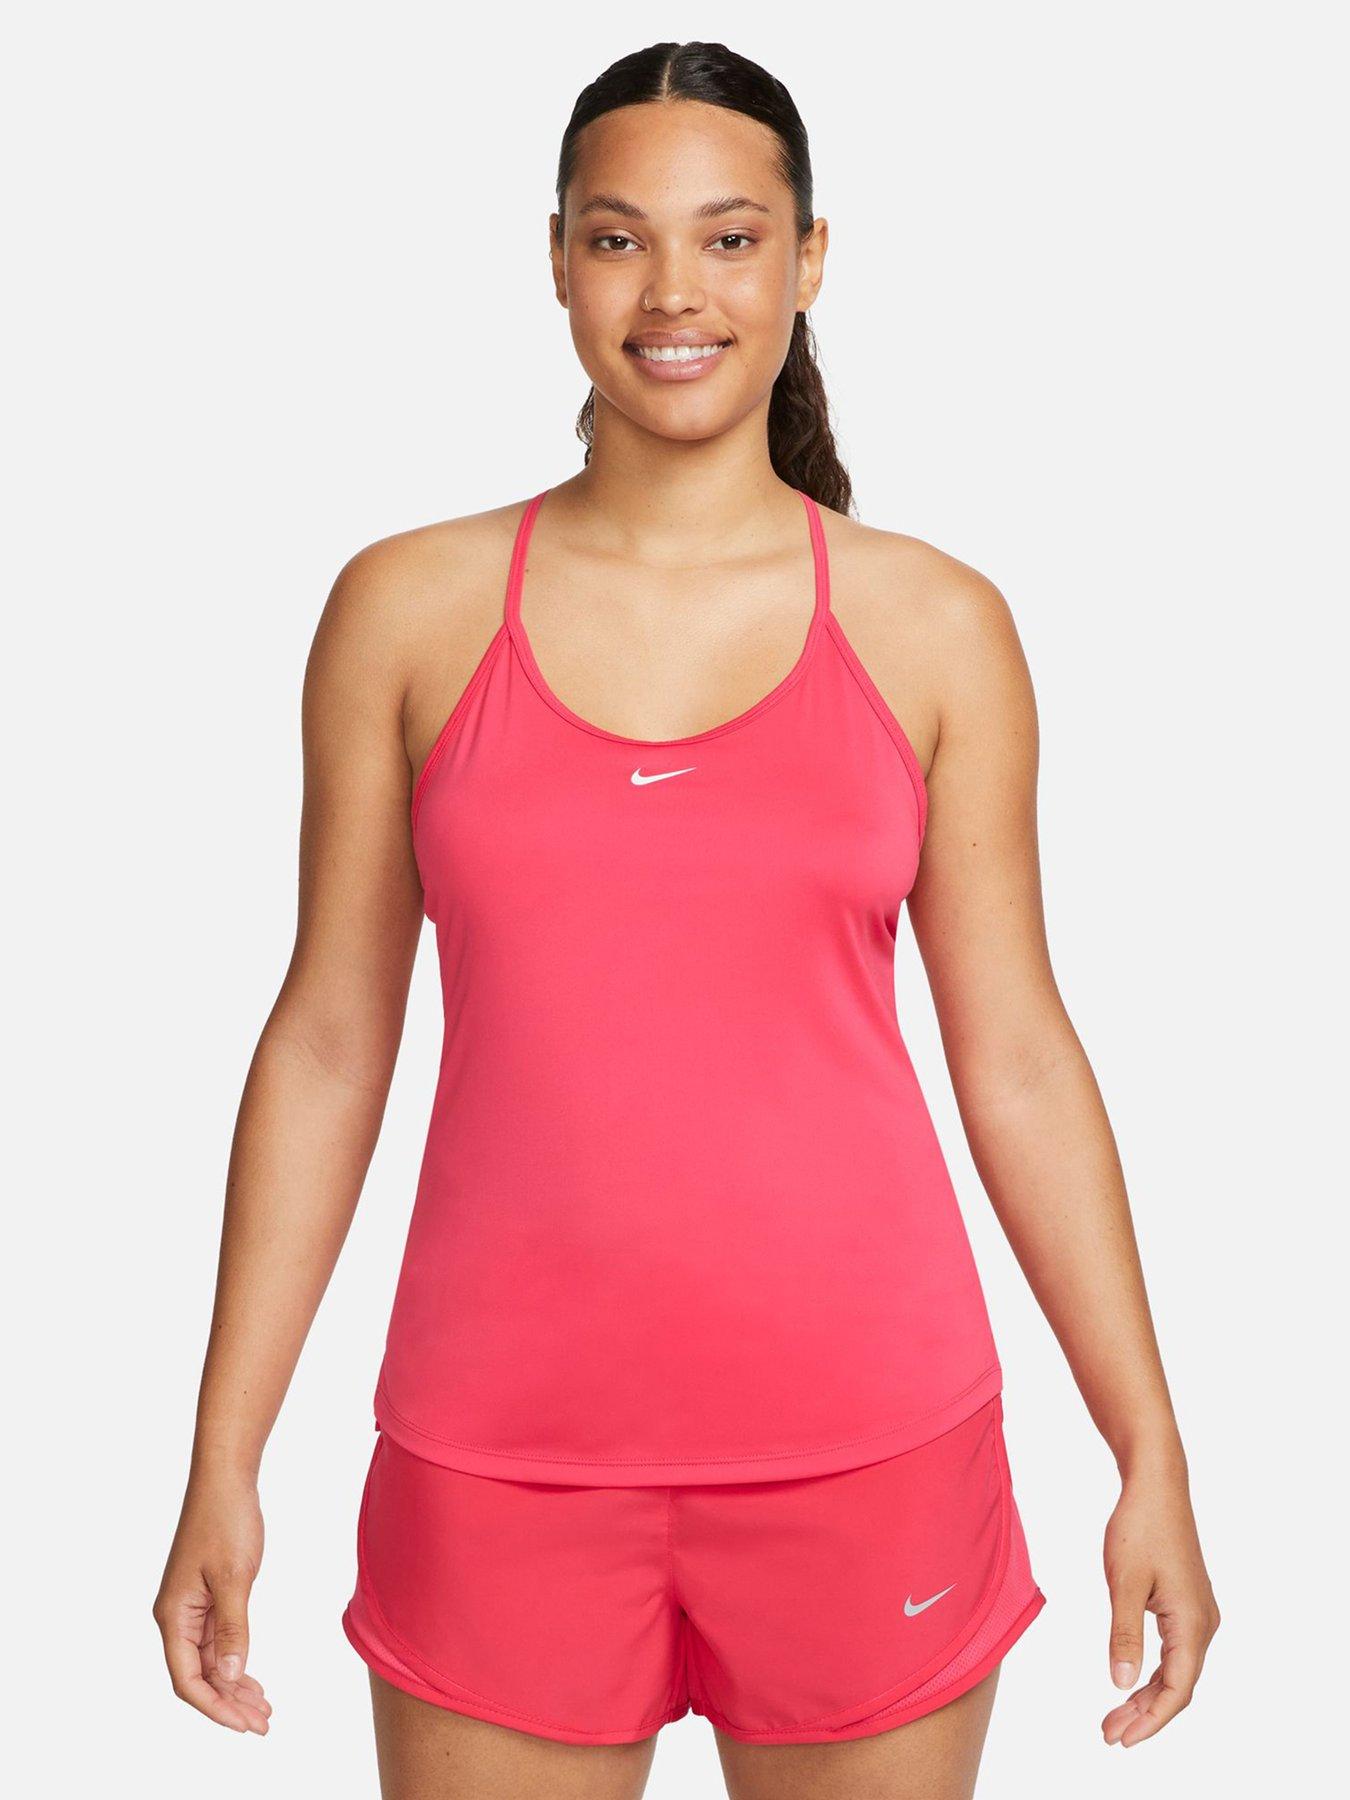 NIKE Dri-fit Gray/Pink Just Do It Racerback Sports Bra Women's Size Med 